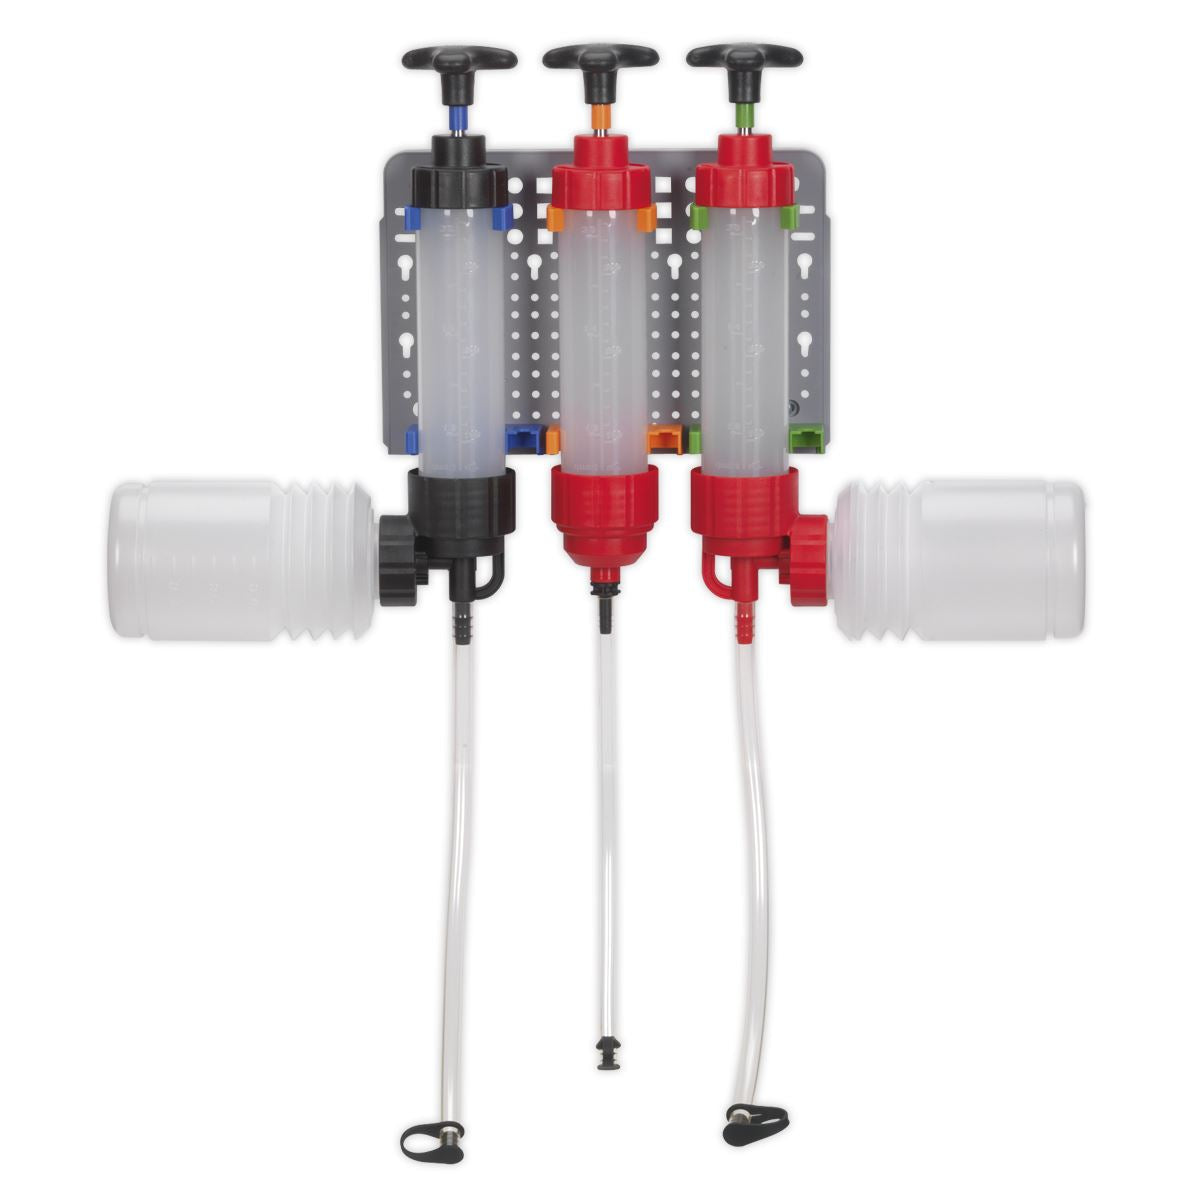 Sealey Fluid Transfer Syringe Set 3pc